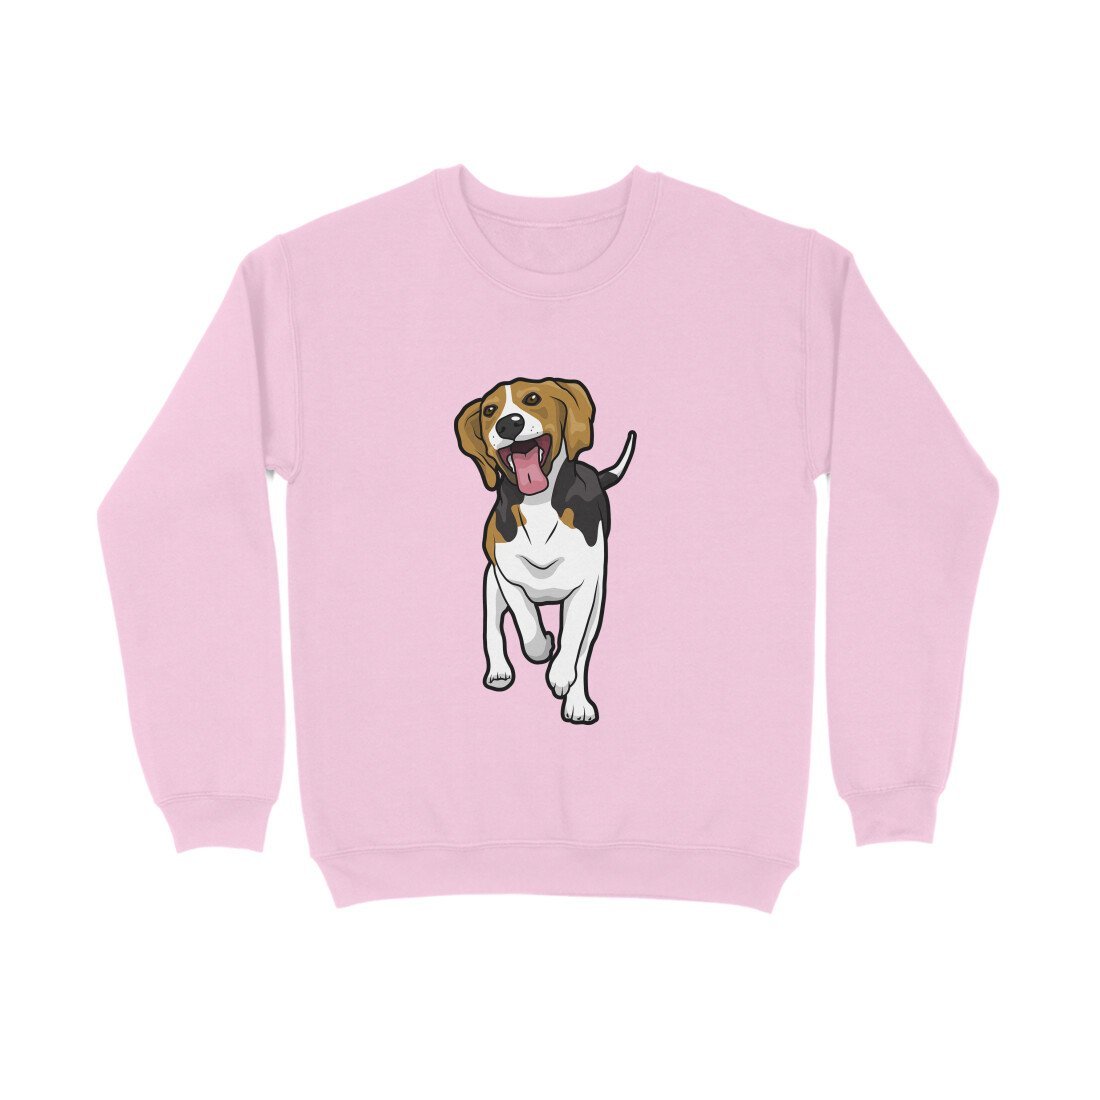 Sweatshirt (Unisex) - Fun Loving Beagle - Wagr - The Smart Petcare Platform